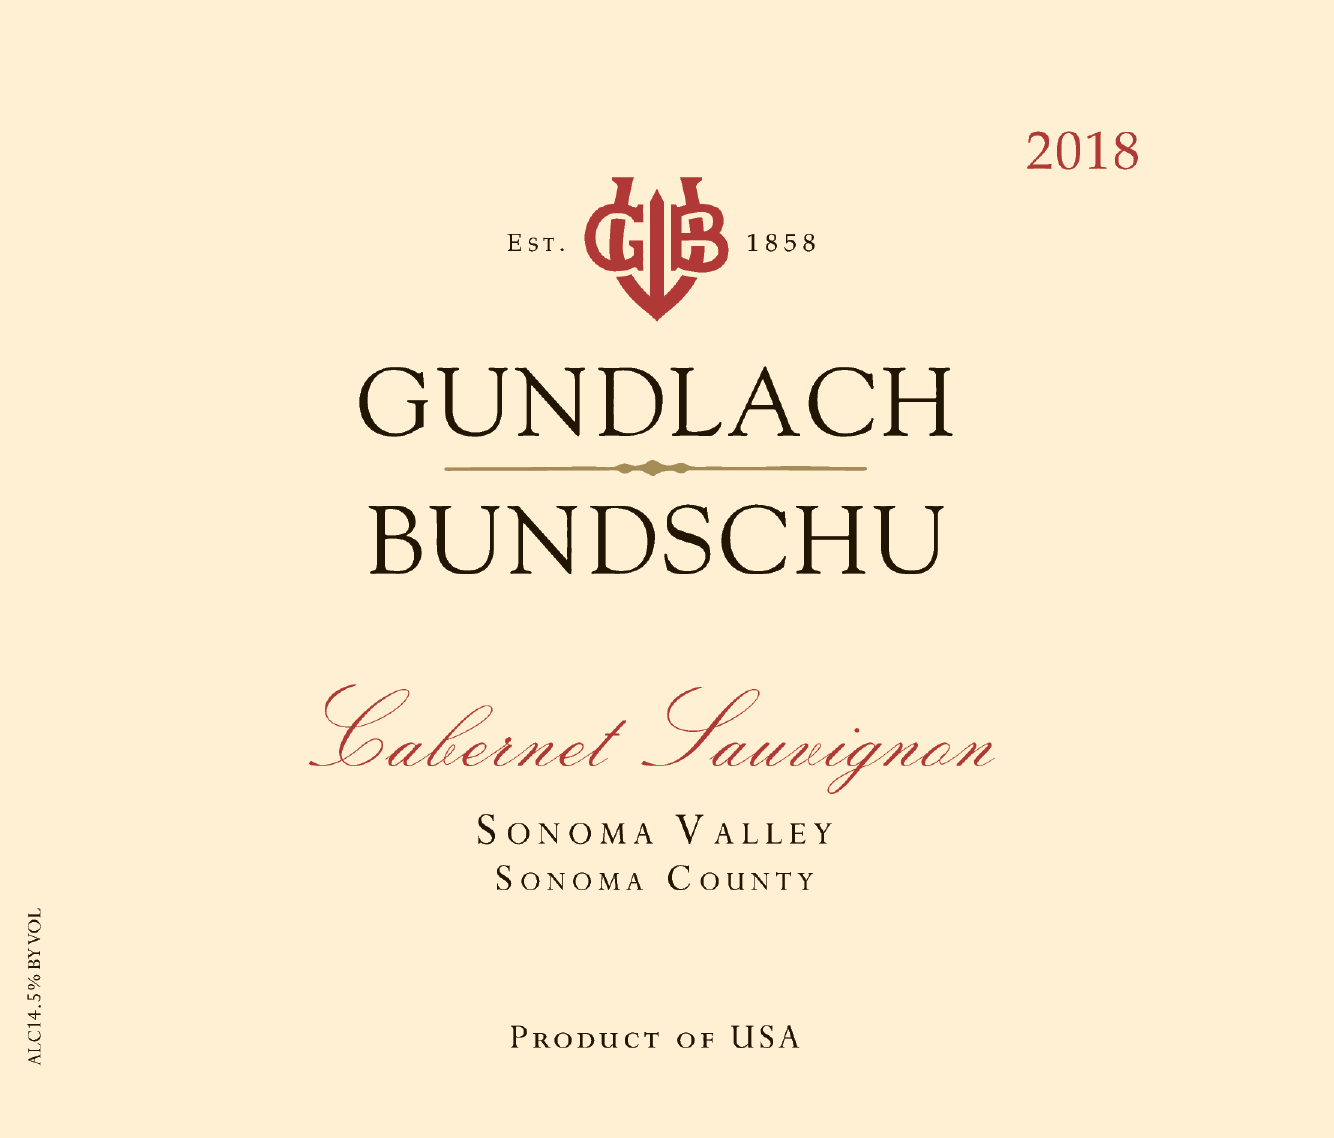 Gundlach Bundschu 2018 wine label